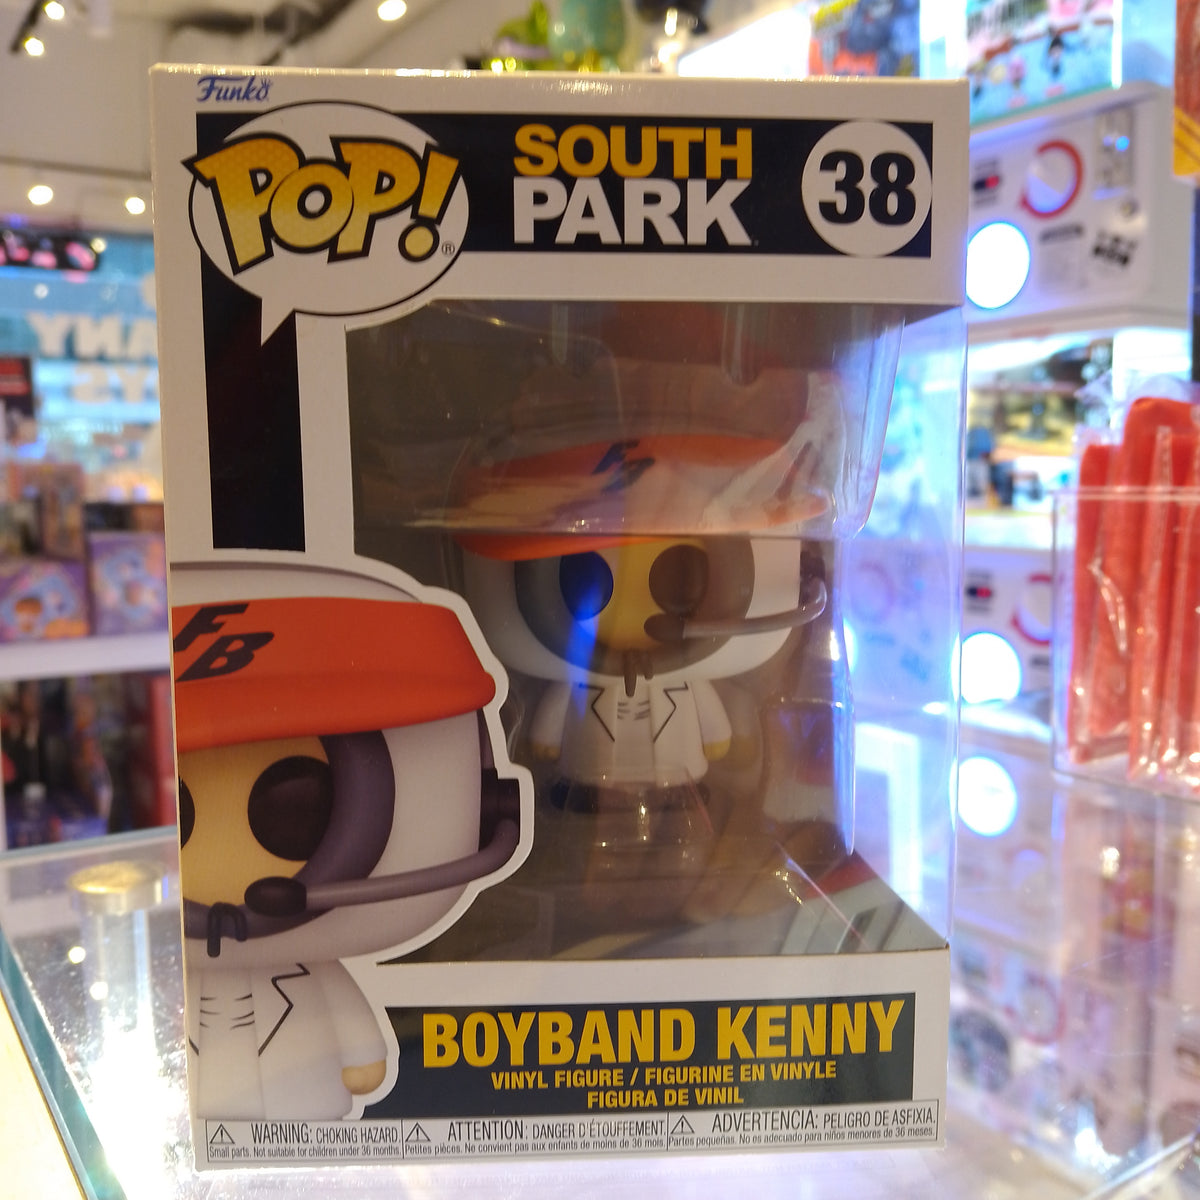 Boyband Kenny - South Park Funko POP! by Funko